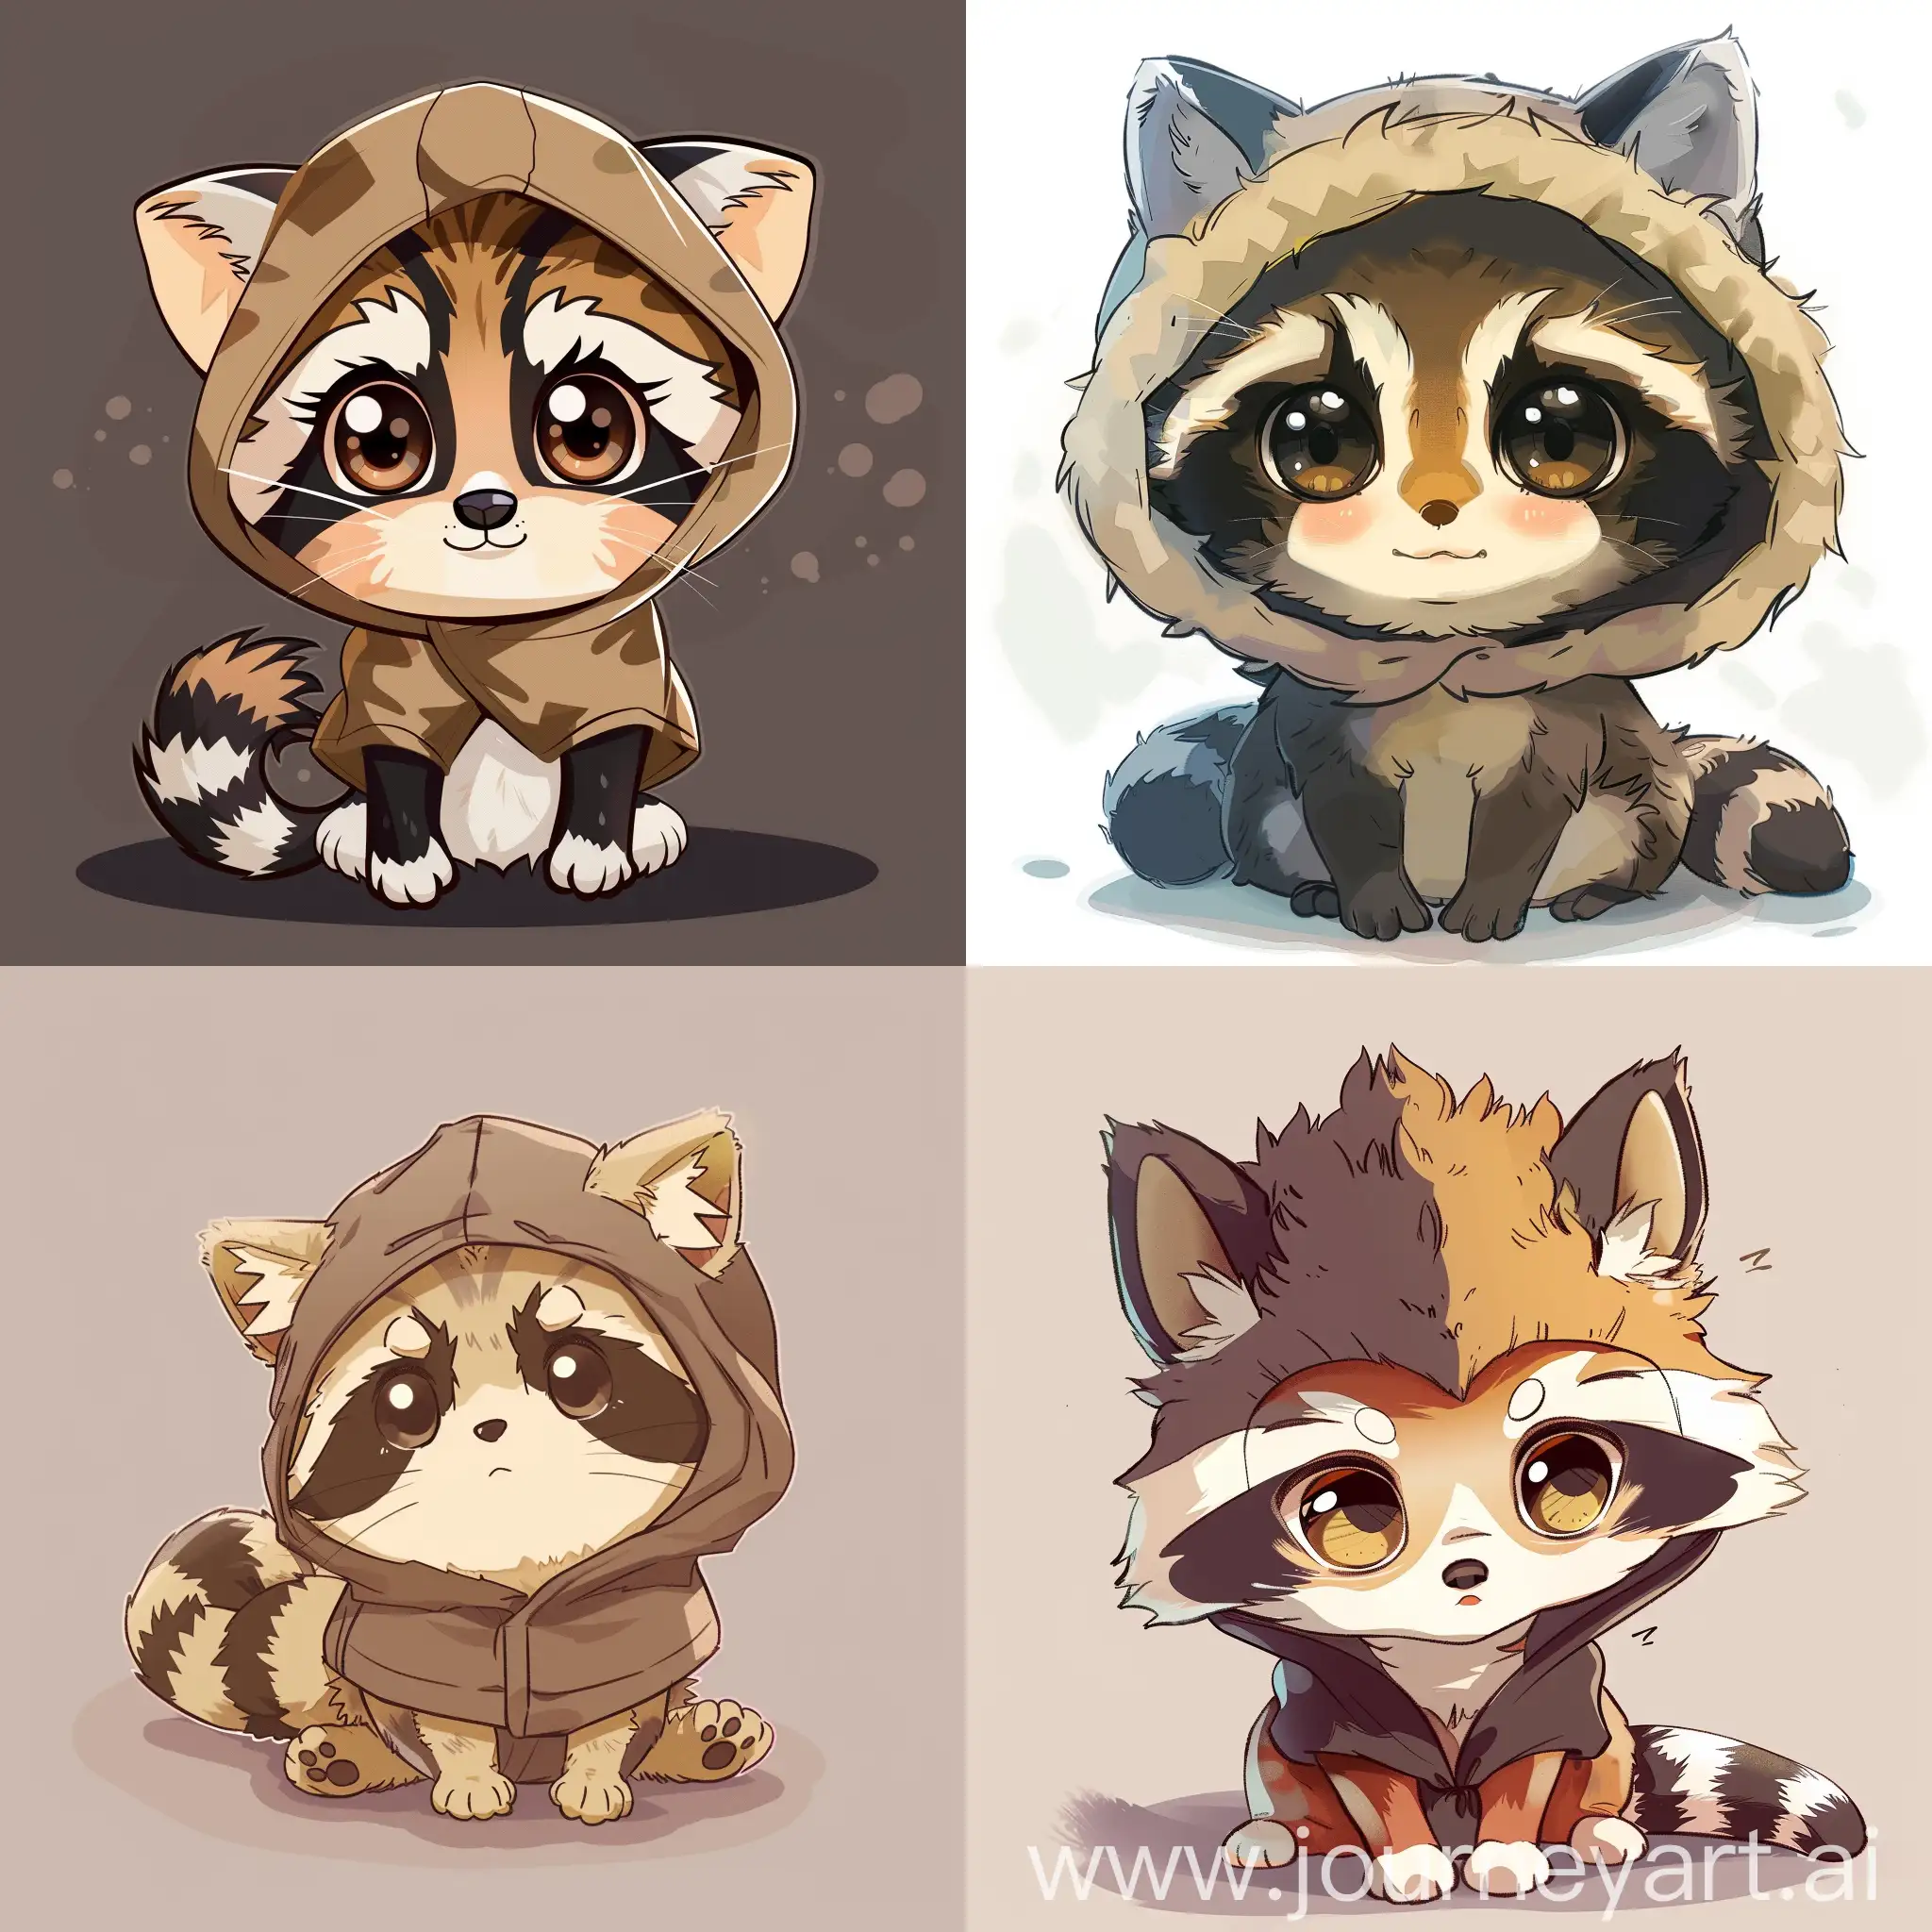 Adorable-Chibi-Cat-Dressed-in-Raccoon-Costume